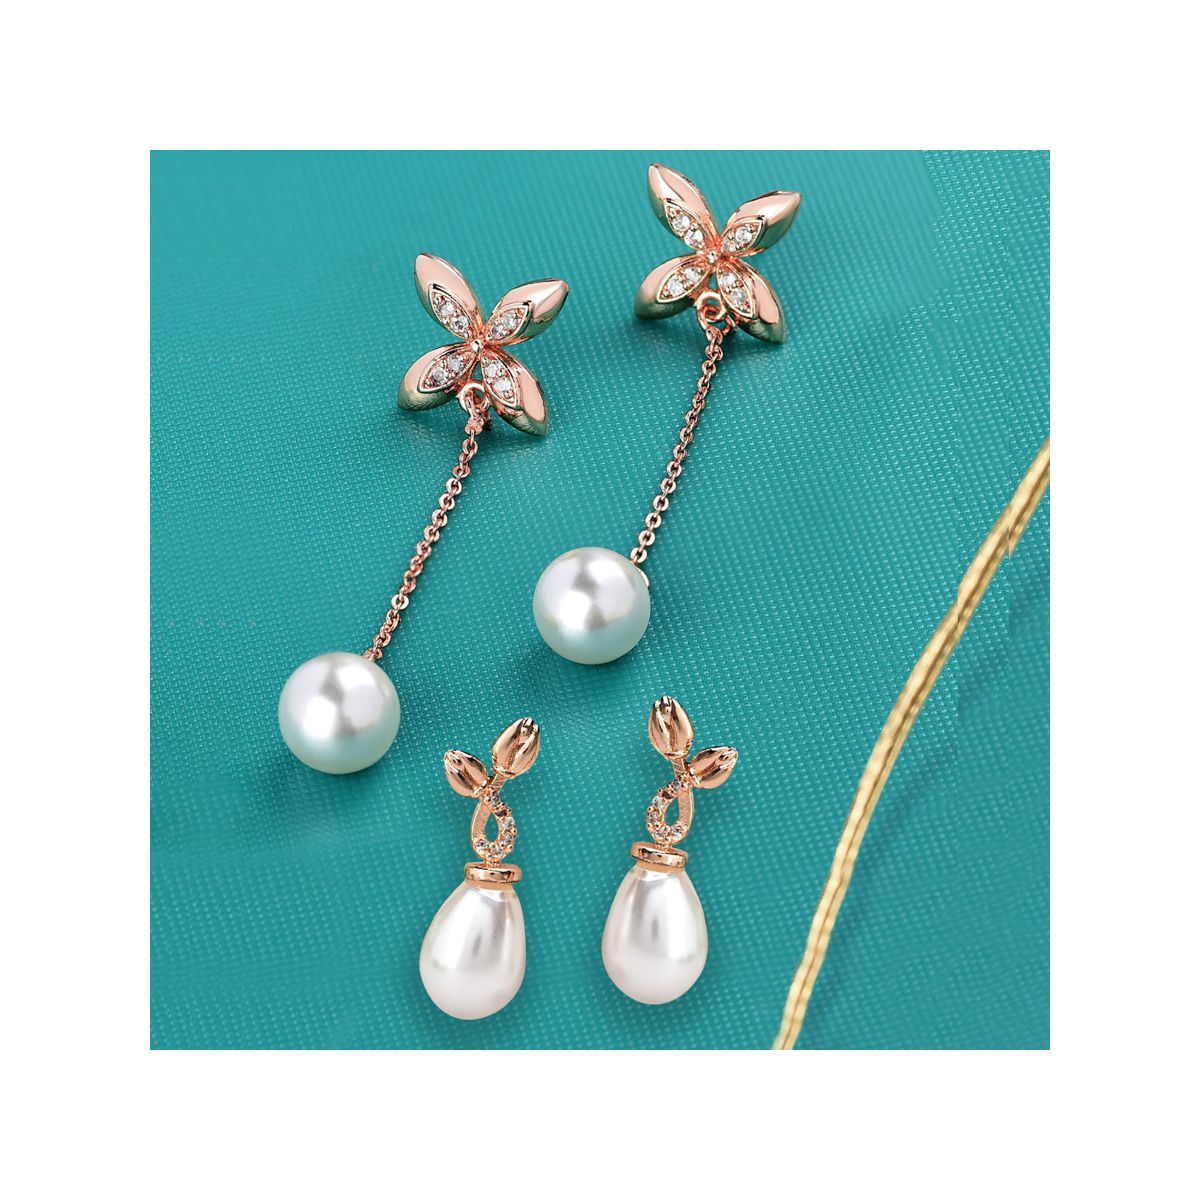 Natural Freshwater Pearl Dangle Earrings Retro Style S925  Etsy Canada  Pearl  earrings dangle Freshwater pearl dangle earrings Earrings